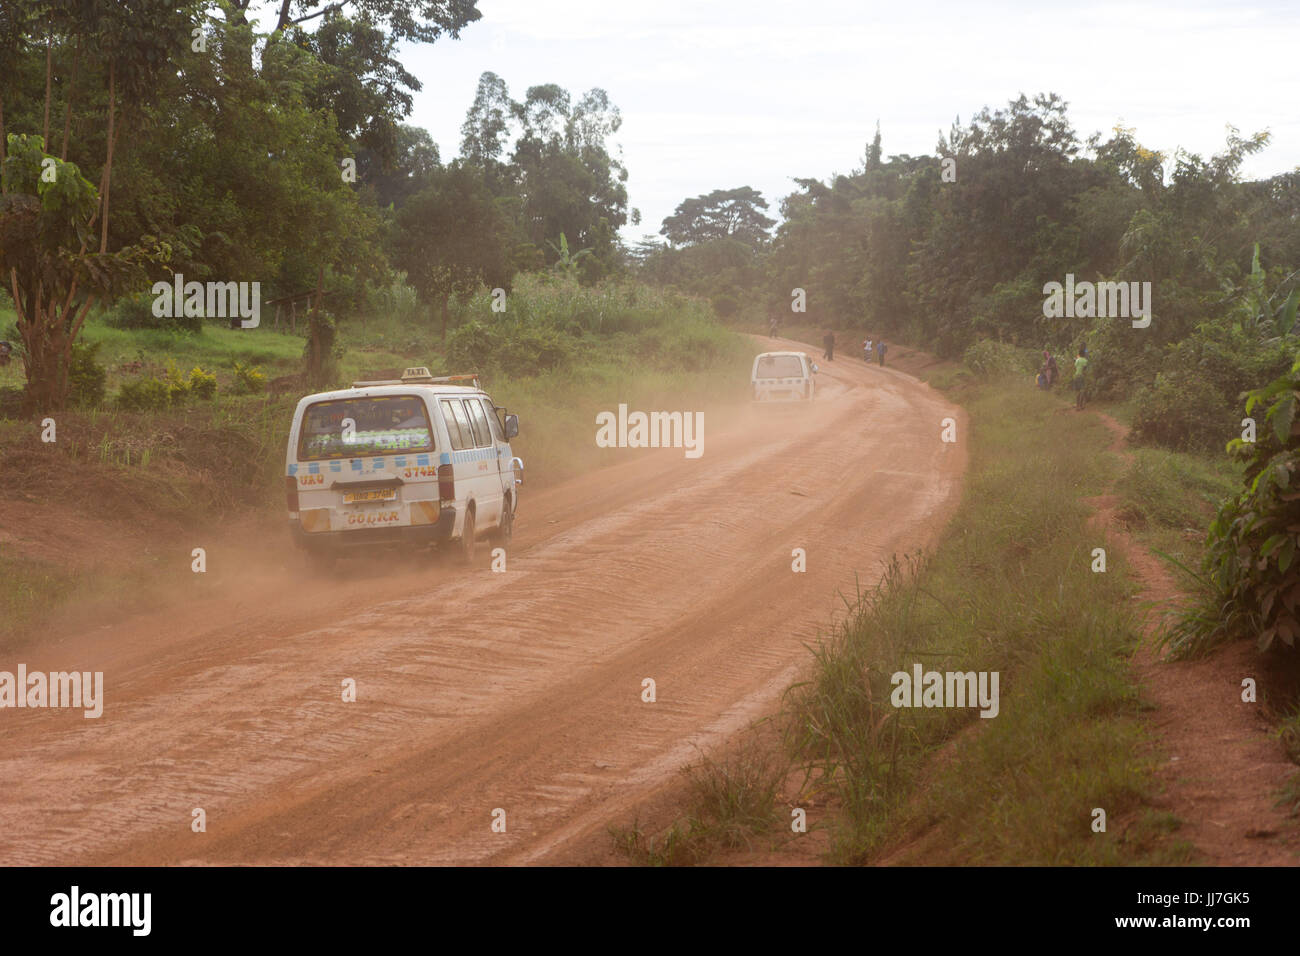 Buikwe, Uganda, 17 May 2017. A taxi car 'matatu' dashing on a dirt road Stock Photo